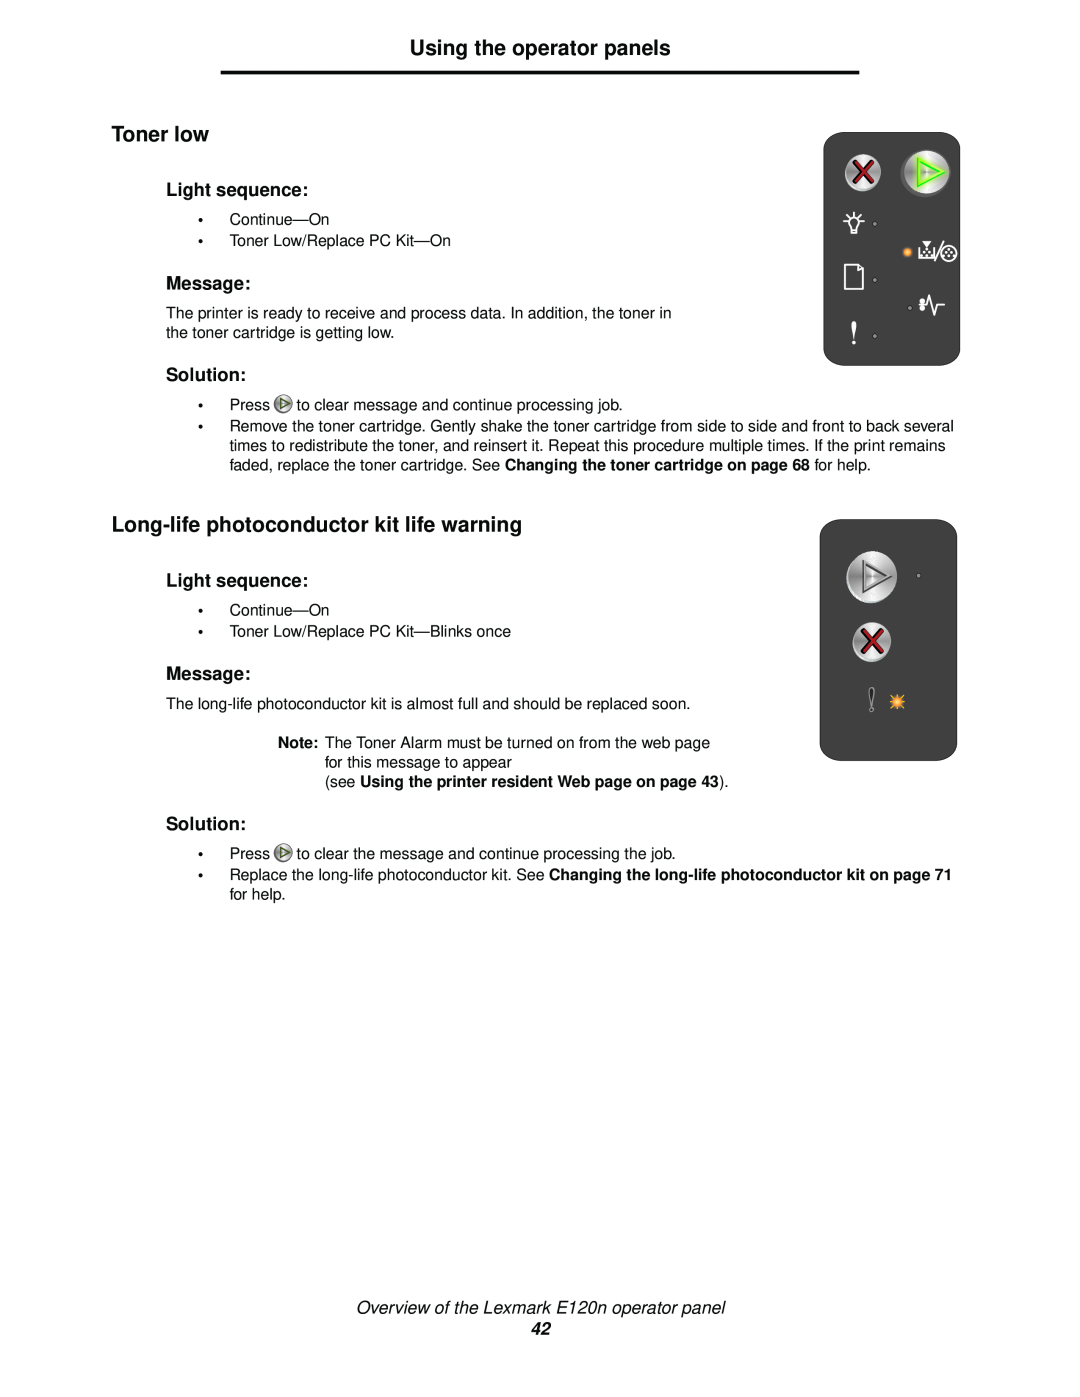 Lexmark 120 manual Using the operator panels Toner low, Long-life photoconductor kit life warning, Light sequence, Message 